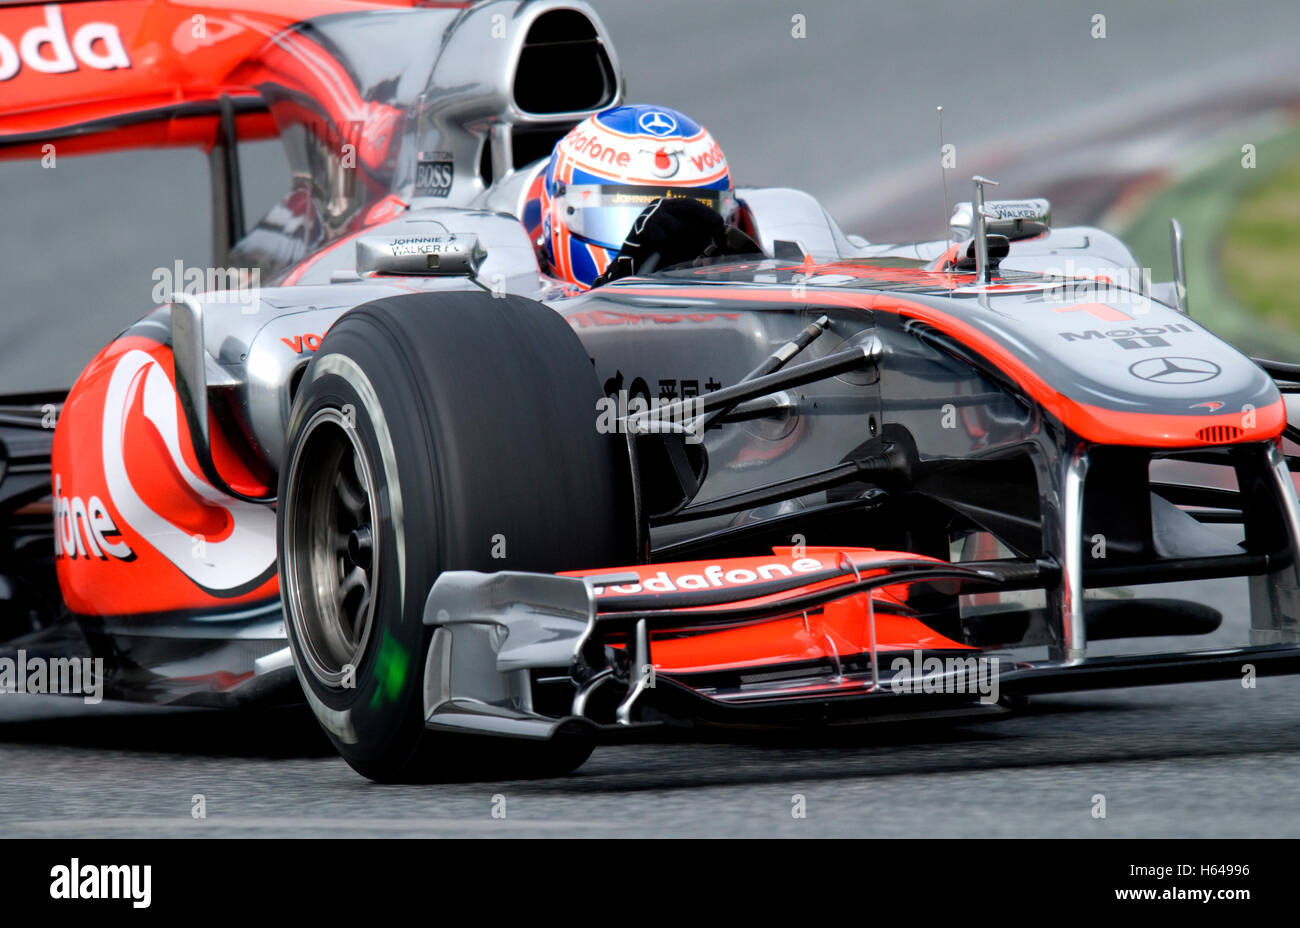 Motorsport, Jenson Button, GBR, im McLaren-Mercedes MP4-25 Rennwagen, Formel-1-Test am Circuit de Catalunya Rennen Stockfoto